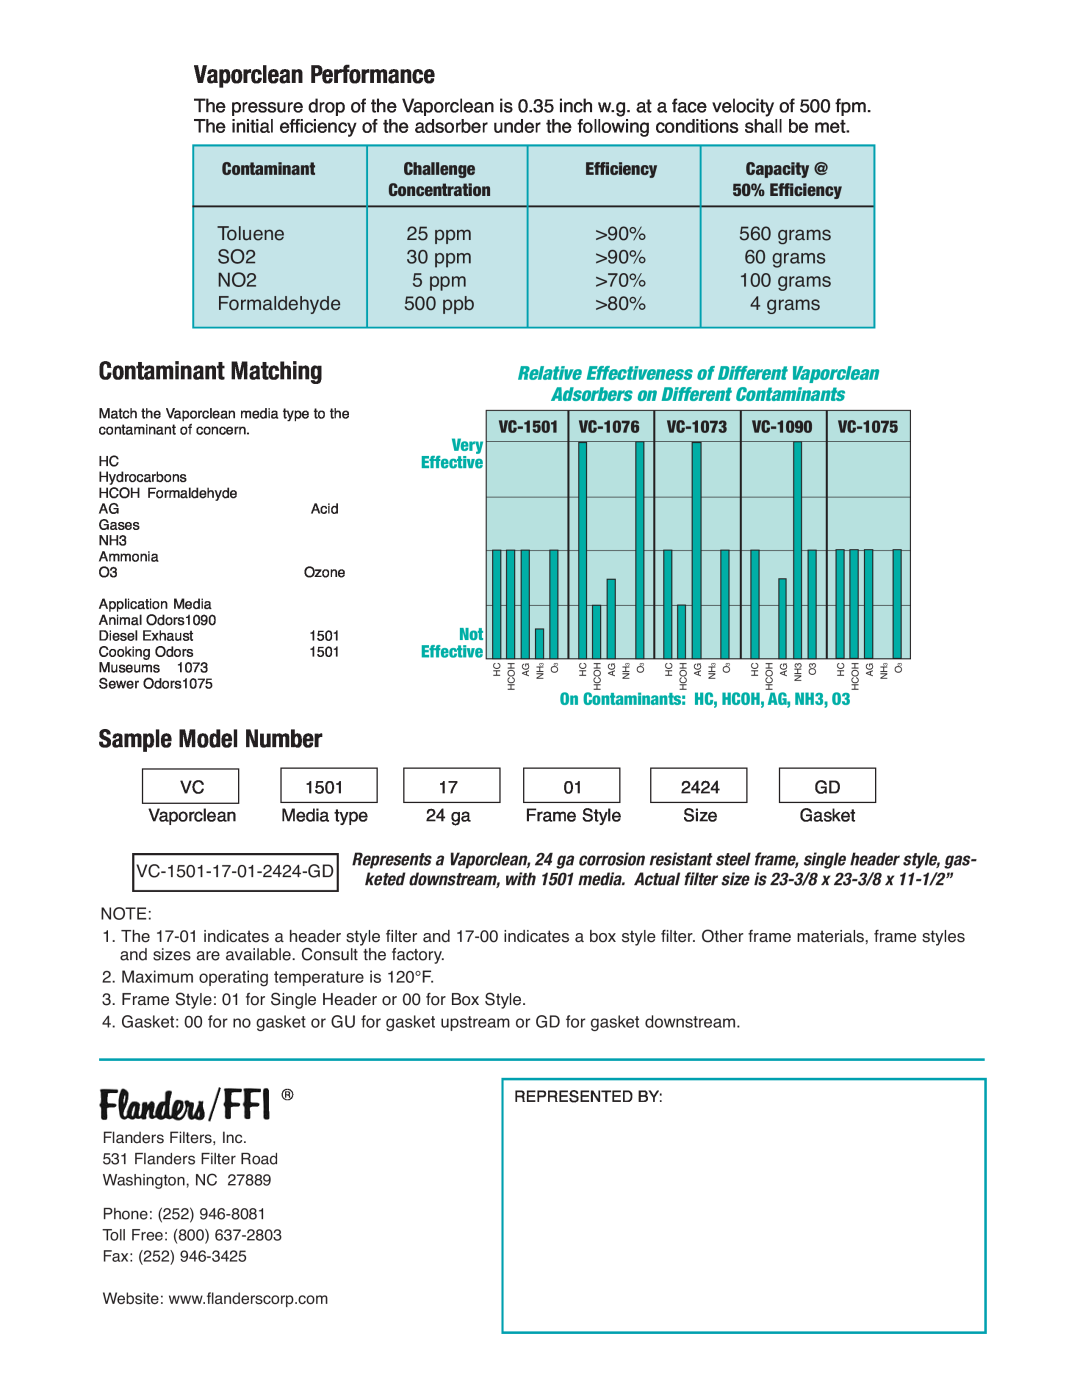 Precisionaire PB1209 Vaporclean Performance, Contaminant Matching, Sample Model Number, Toluene, 25 ppm, 90%, grams, 70% 